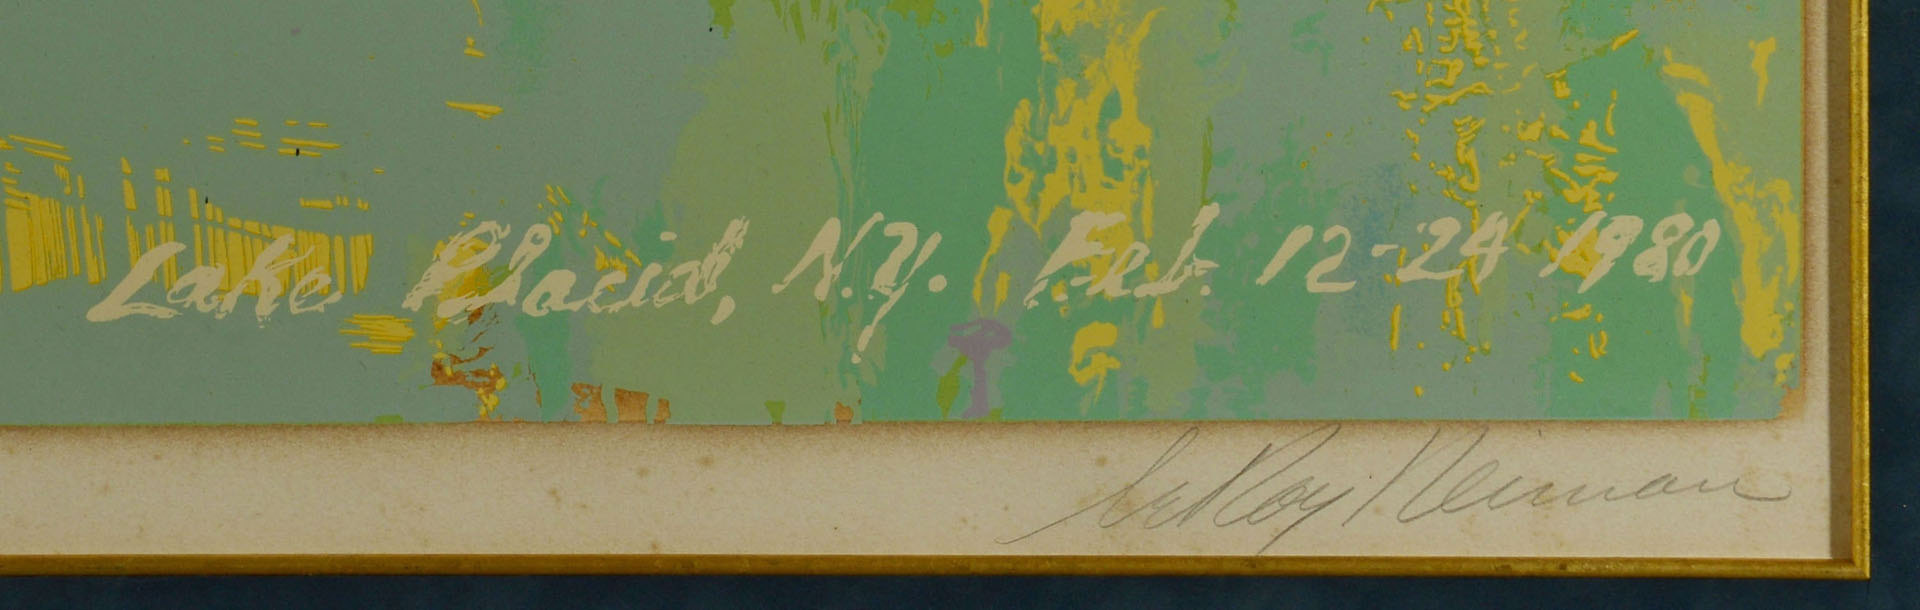 Lot 617: Leroy Neiman, "Lake Placid 1980", signed Serigraph